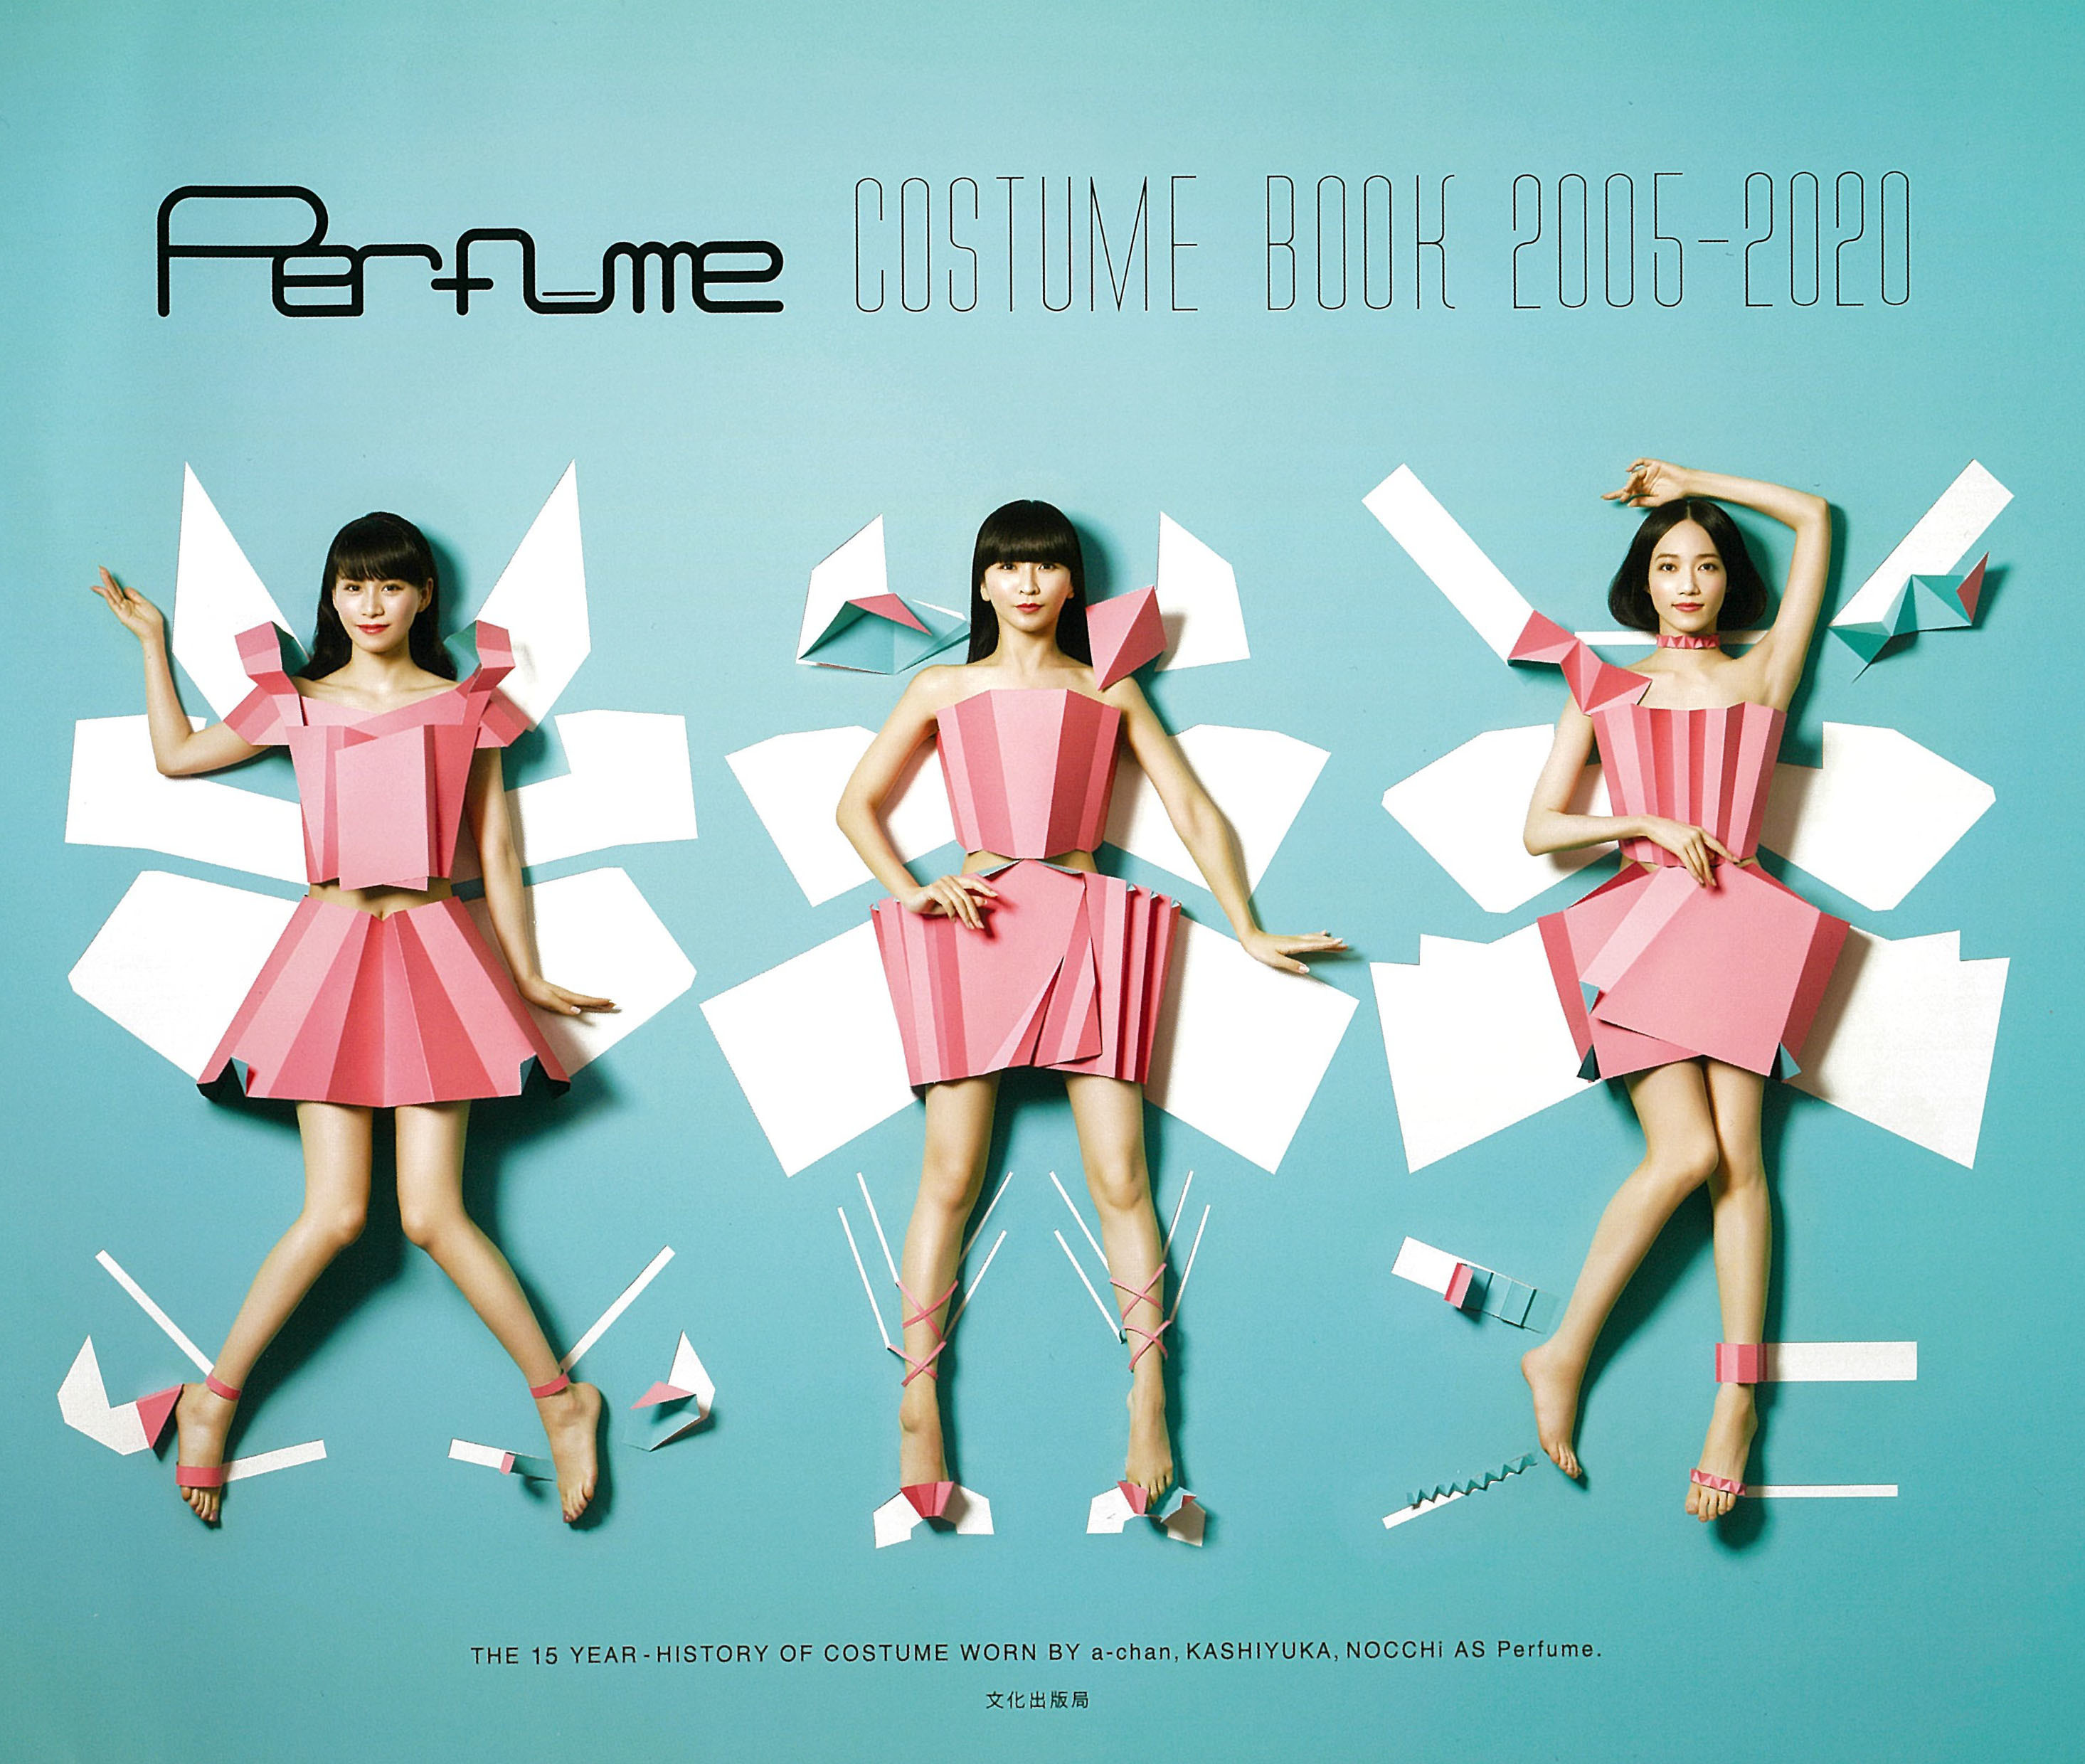 『Perfume COSTUME BOOK 2005-2020』